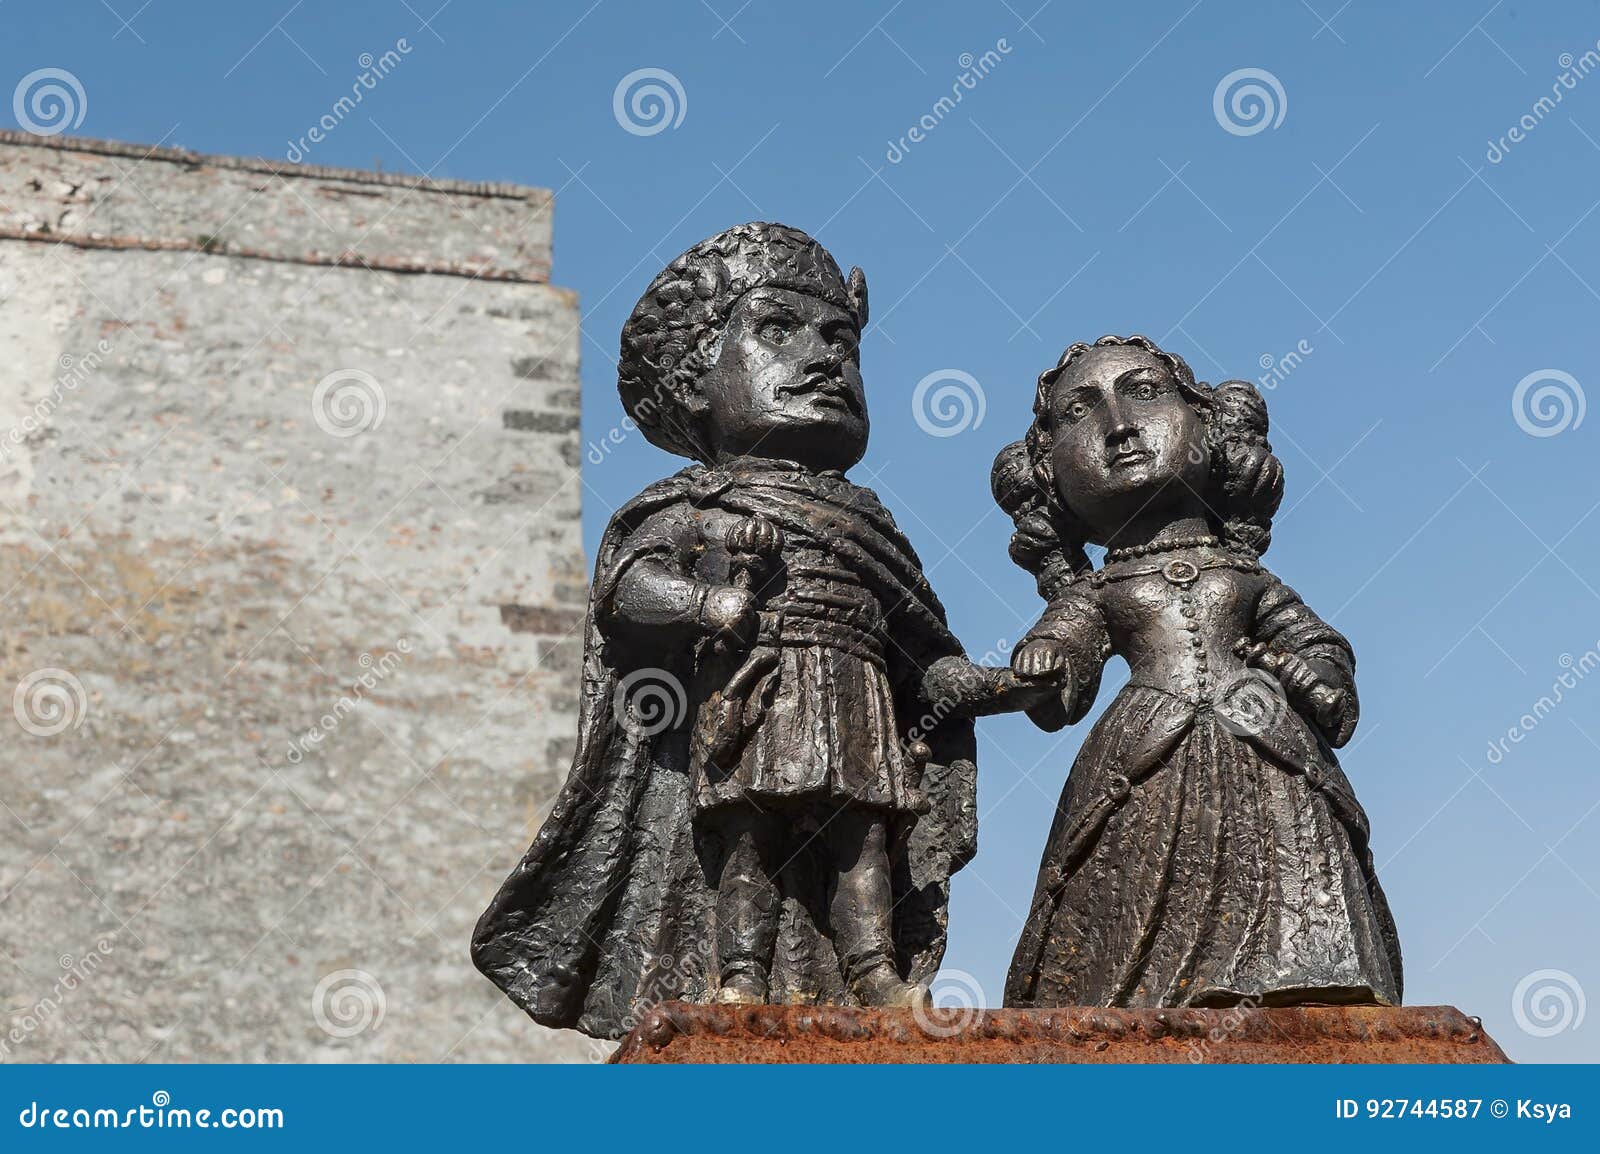 mini-statues of castle palanok, mukachevo, ukraine 2